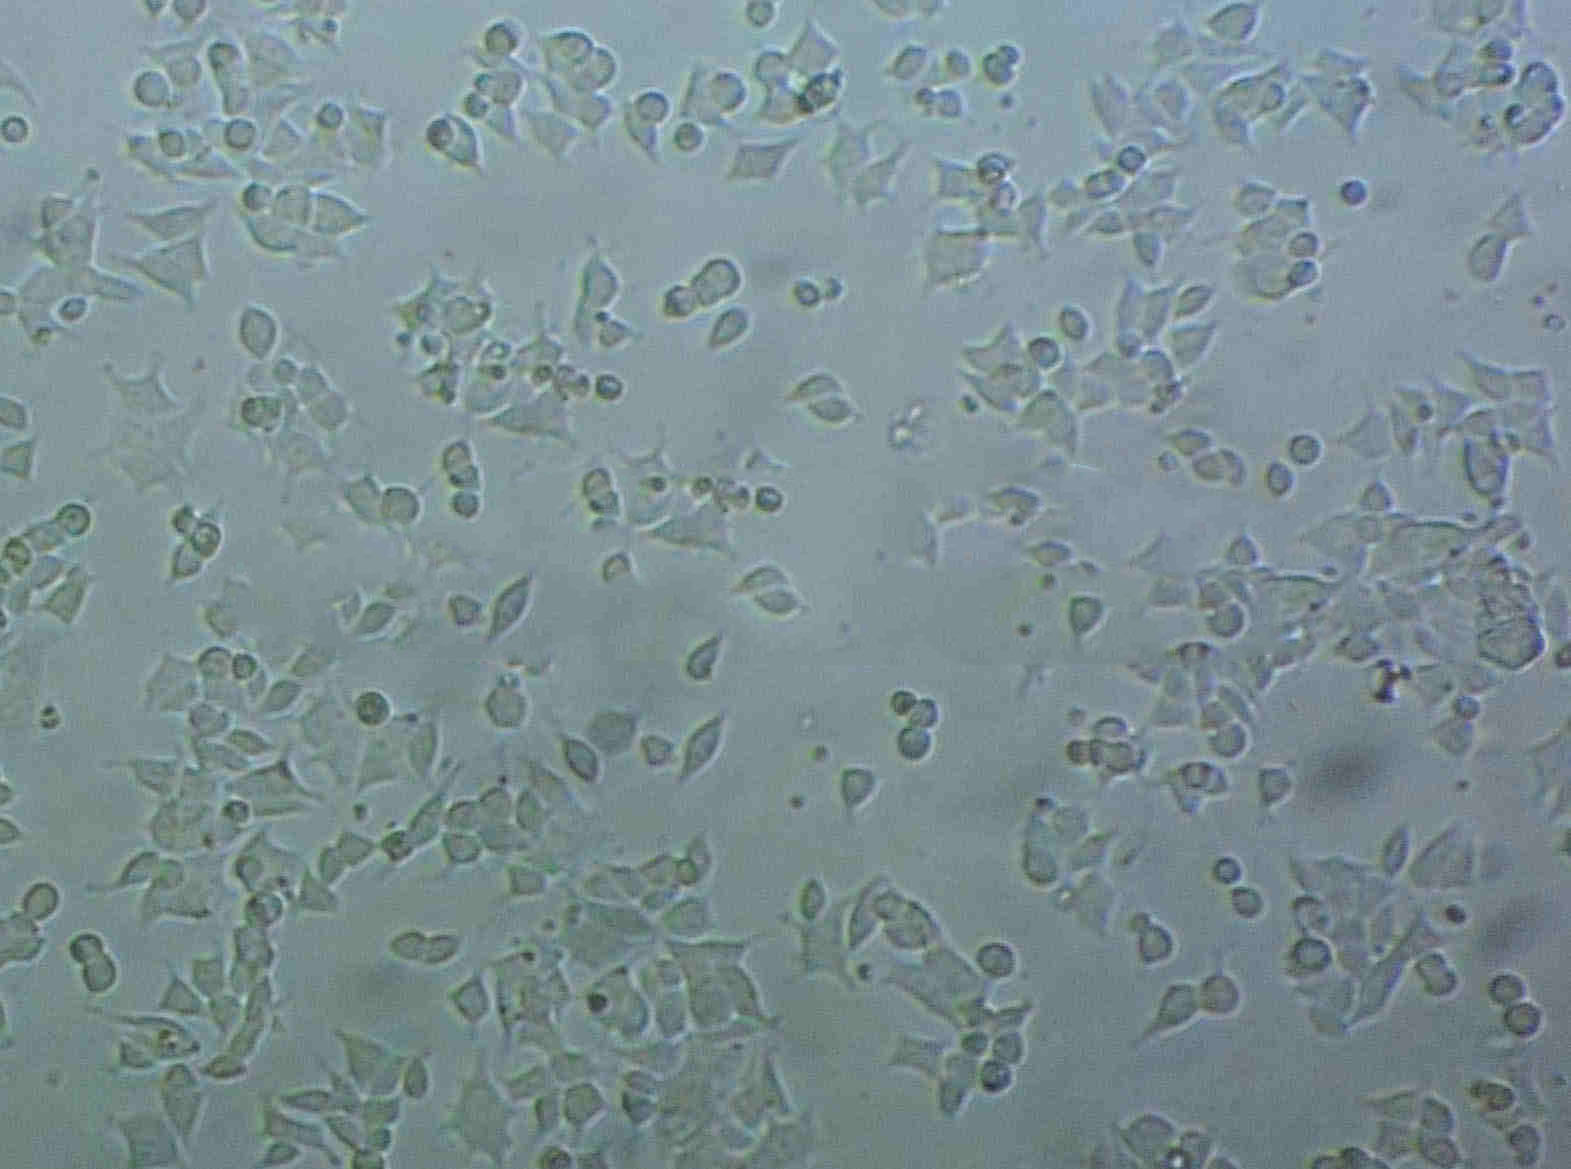 MLTC-1 Cell|小鼠睾丸间质细胞瘤细胞